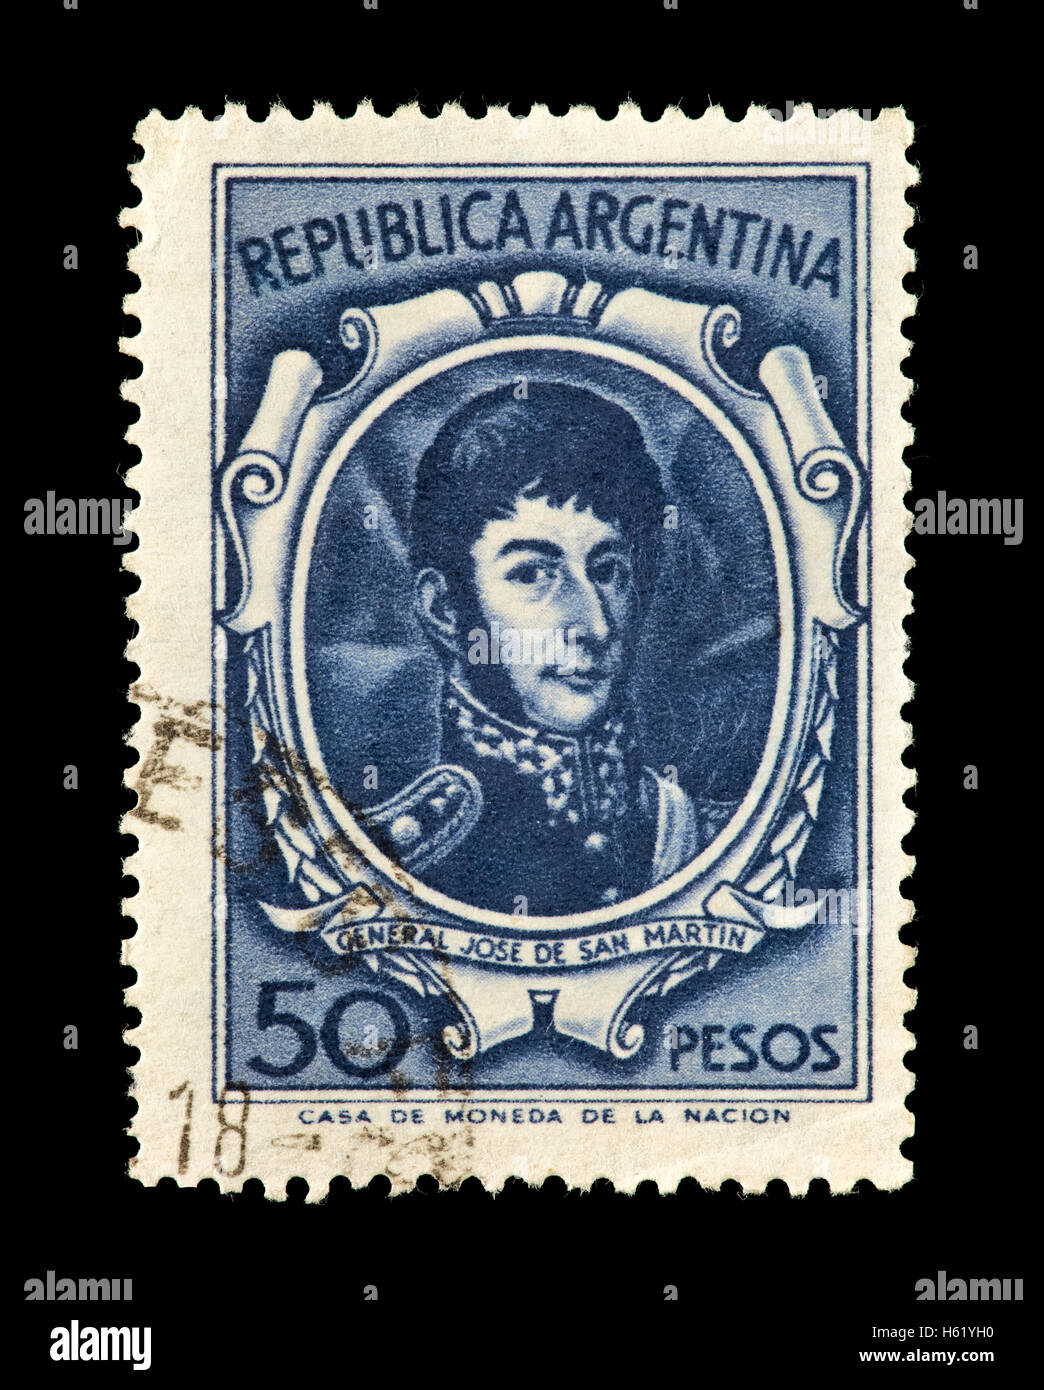 Postage stamp from Argentina depicting General Jose de San Martin. Stock Photo